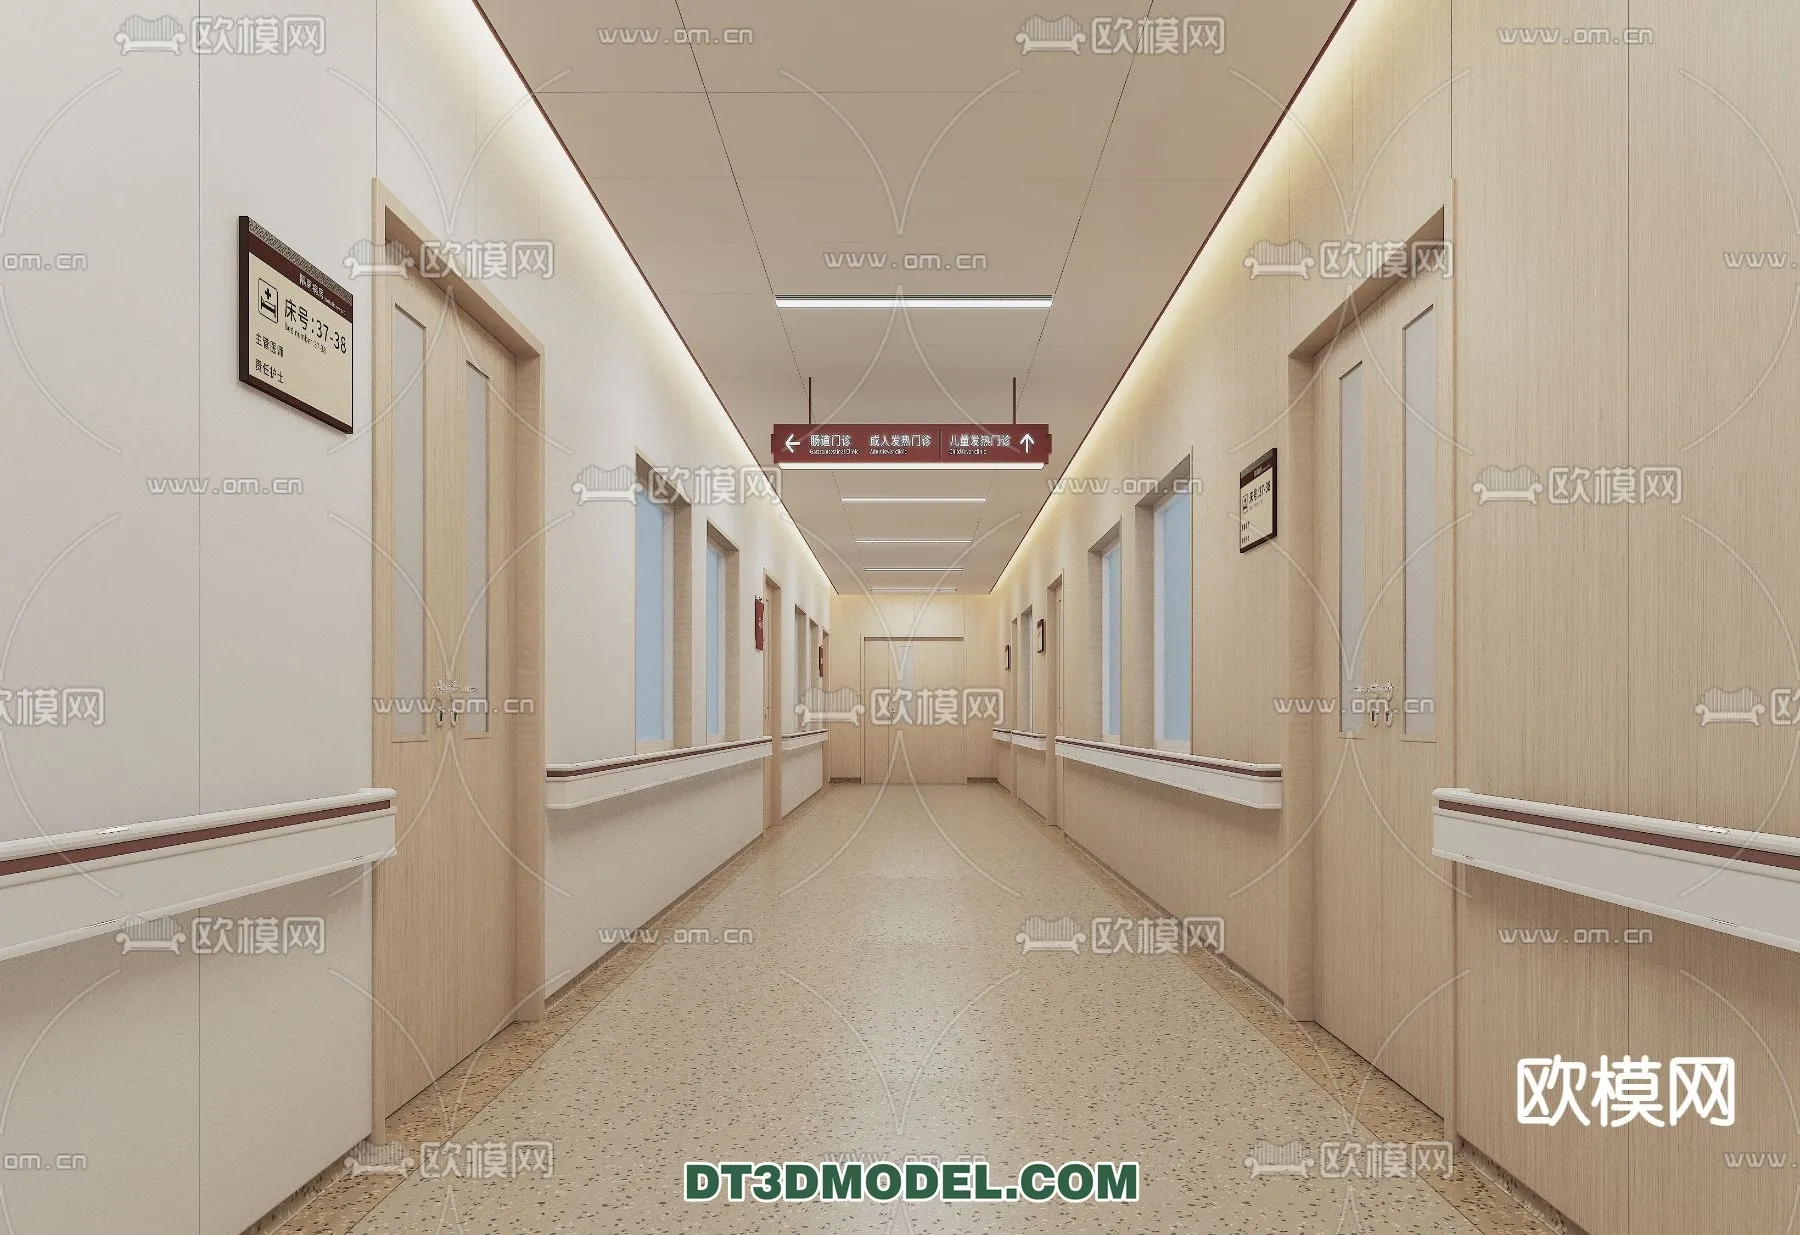 HOSPITAL 3D SCENES – MODERN – 0179